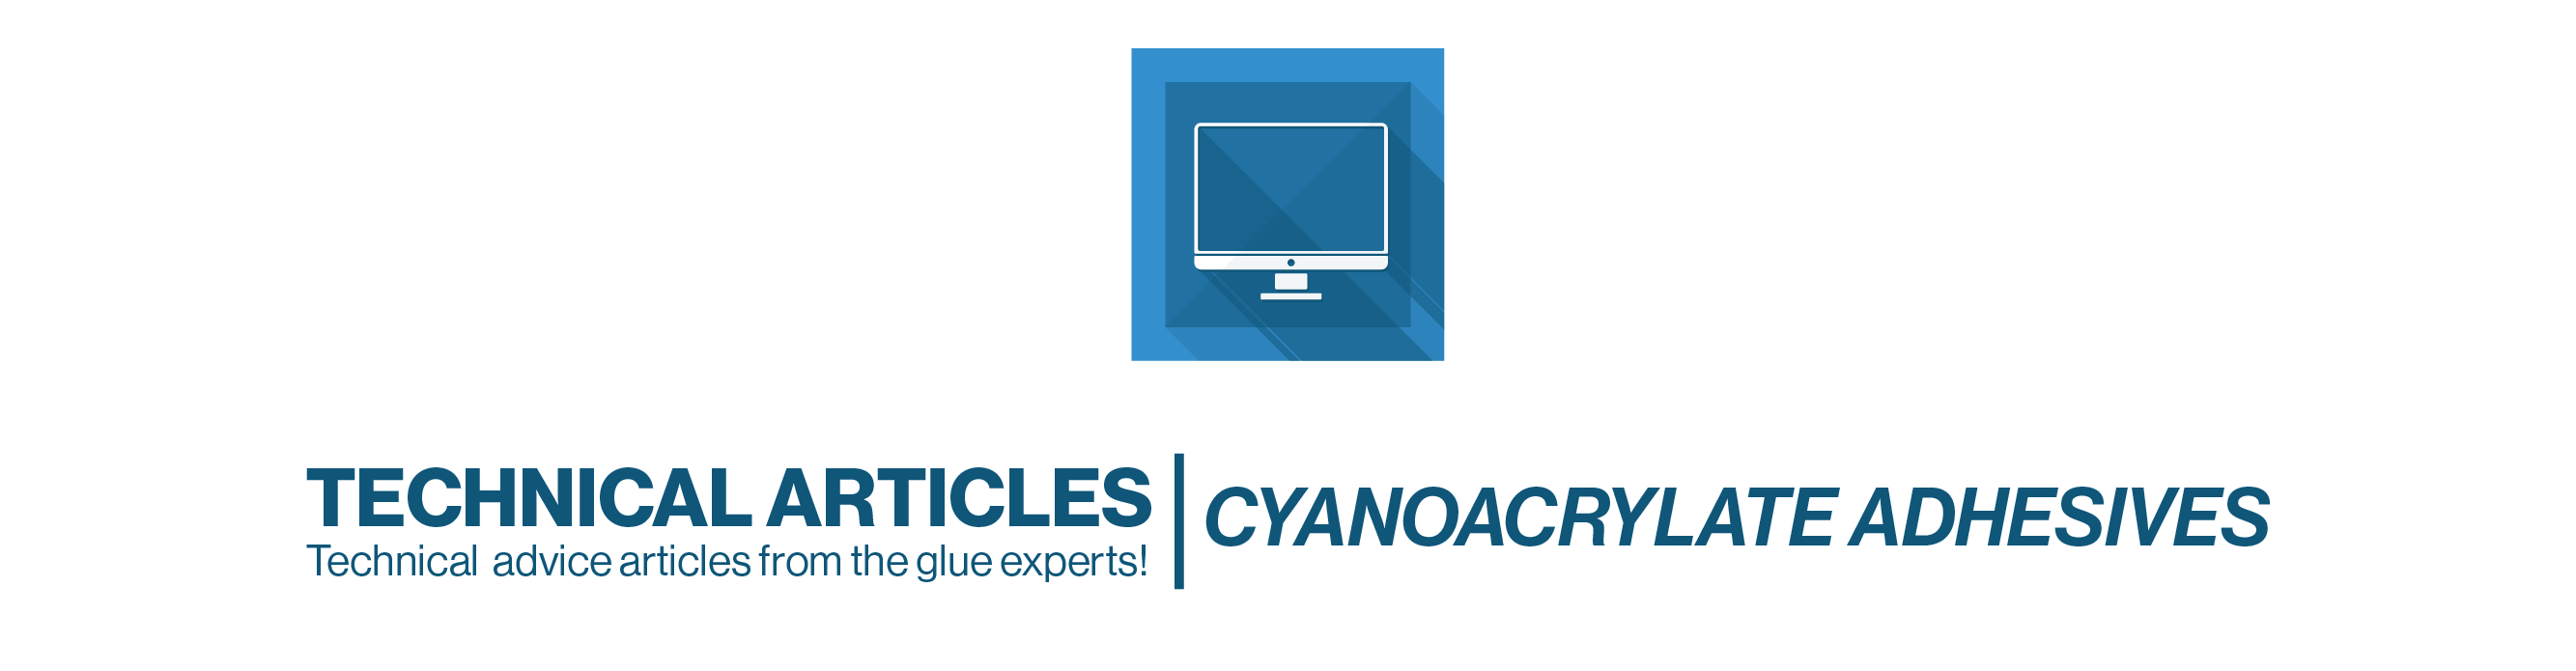 Cyanoacrylate Adhesives - Technical Articles